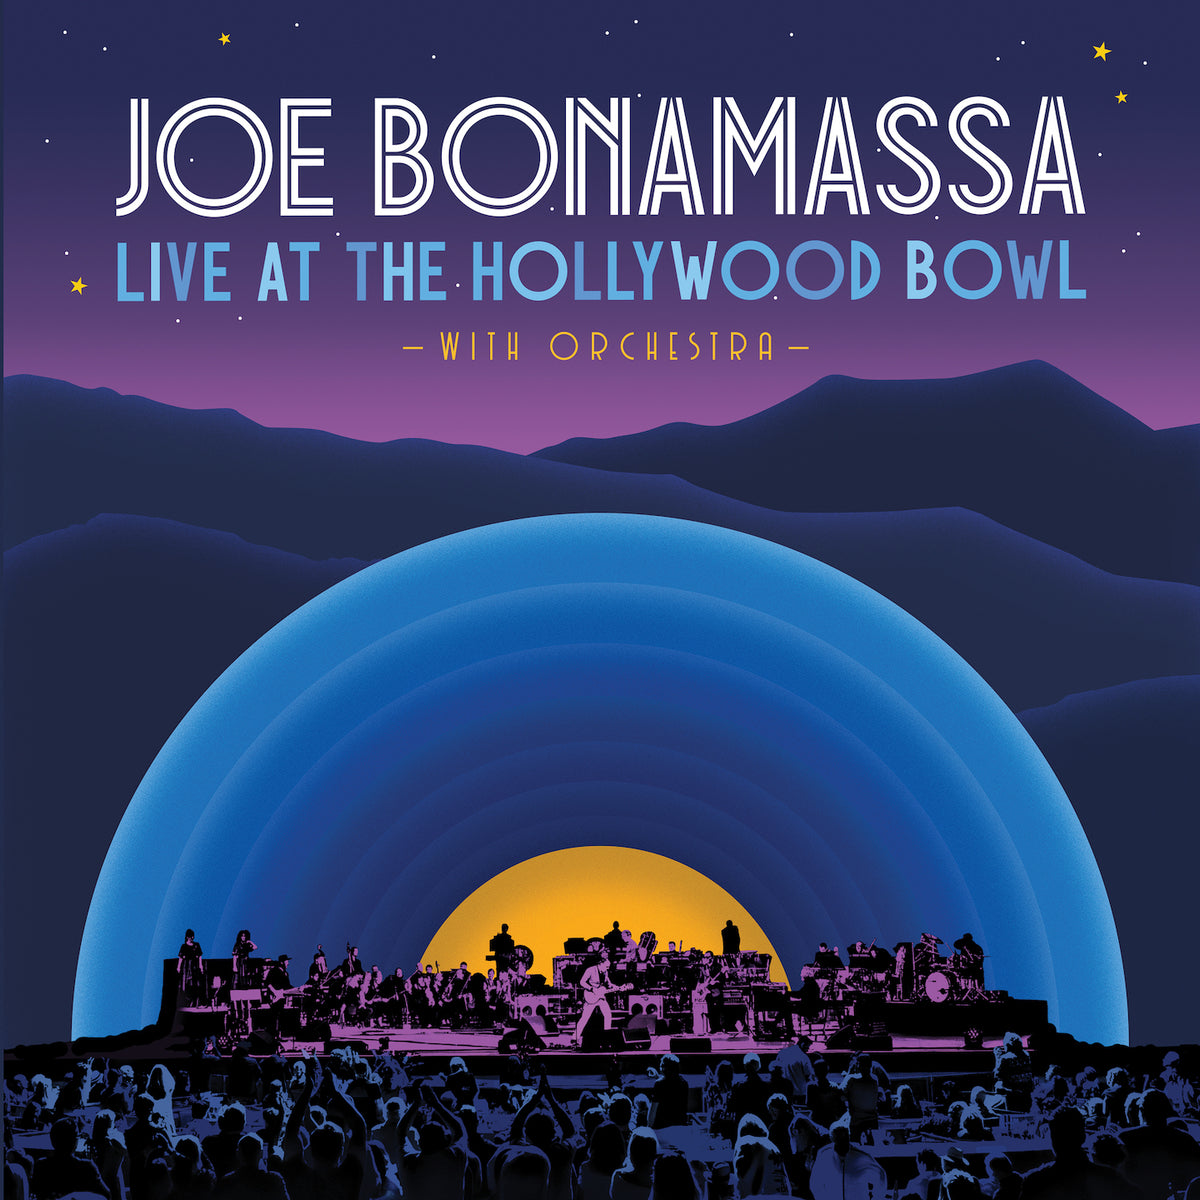 The Last Matador Of Bayonne (Live at the Hollywood Bowl with Orchestra) - Joe Bonamassa - Single